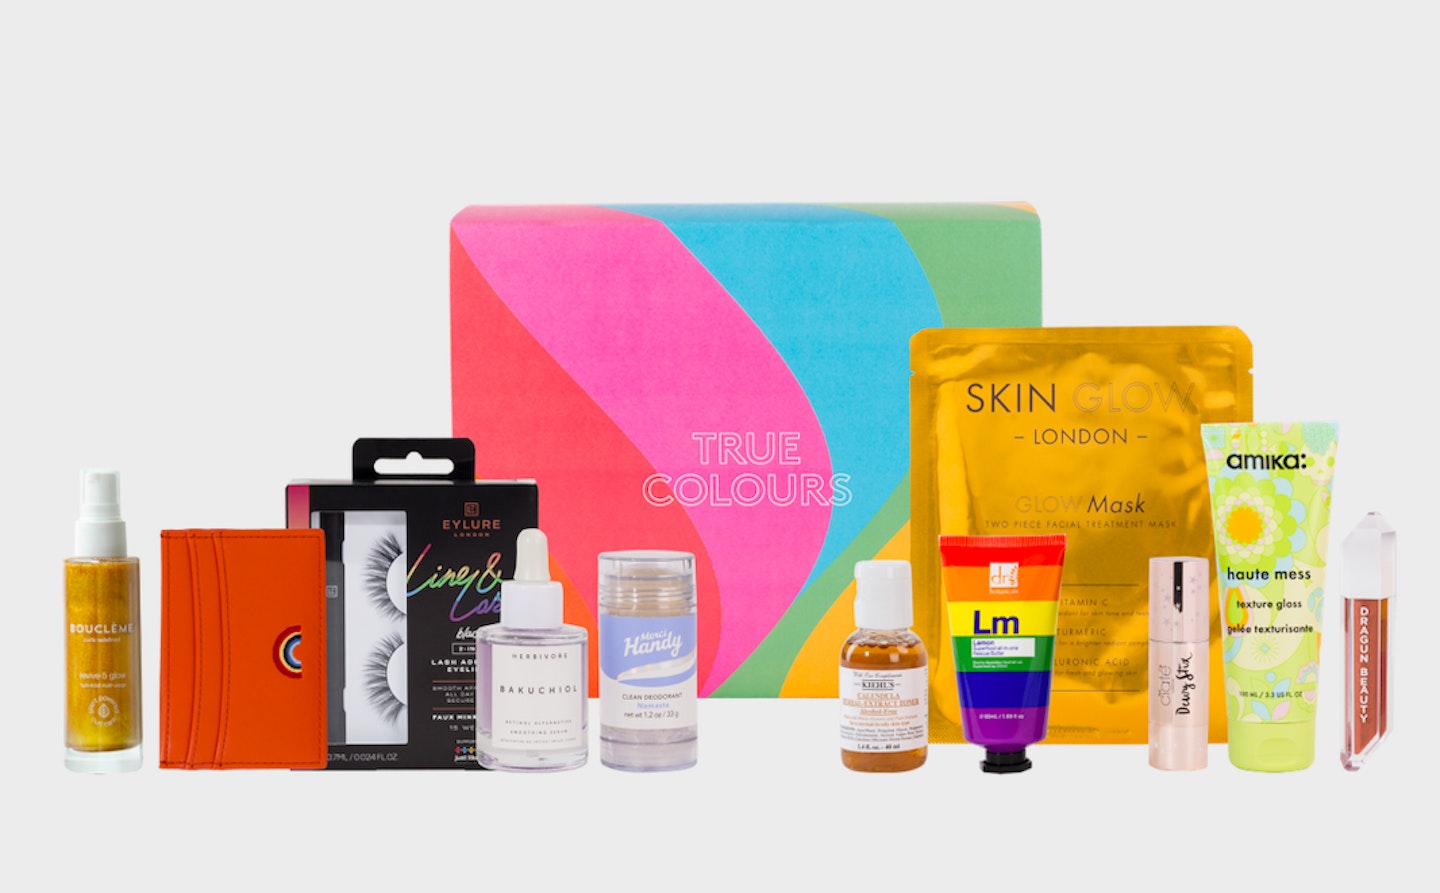 Birchbox launches Limited Edition Pride box